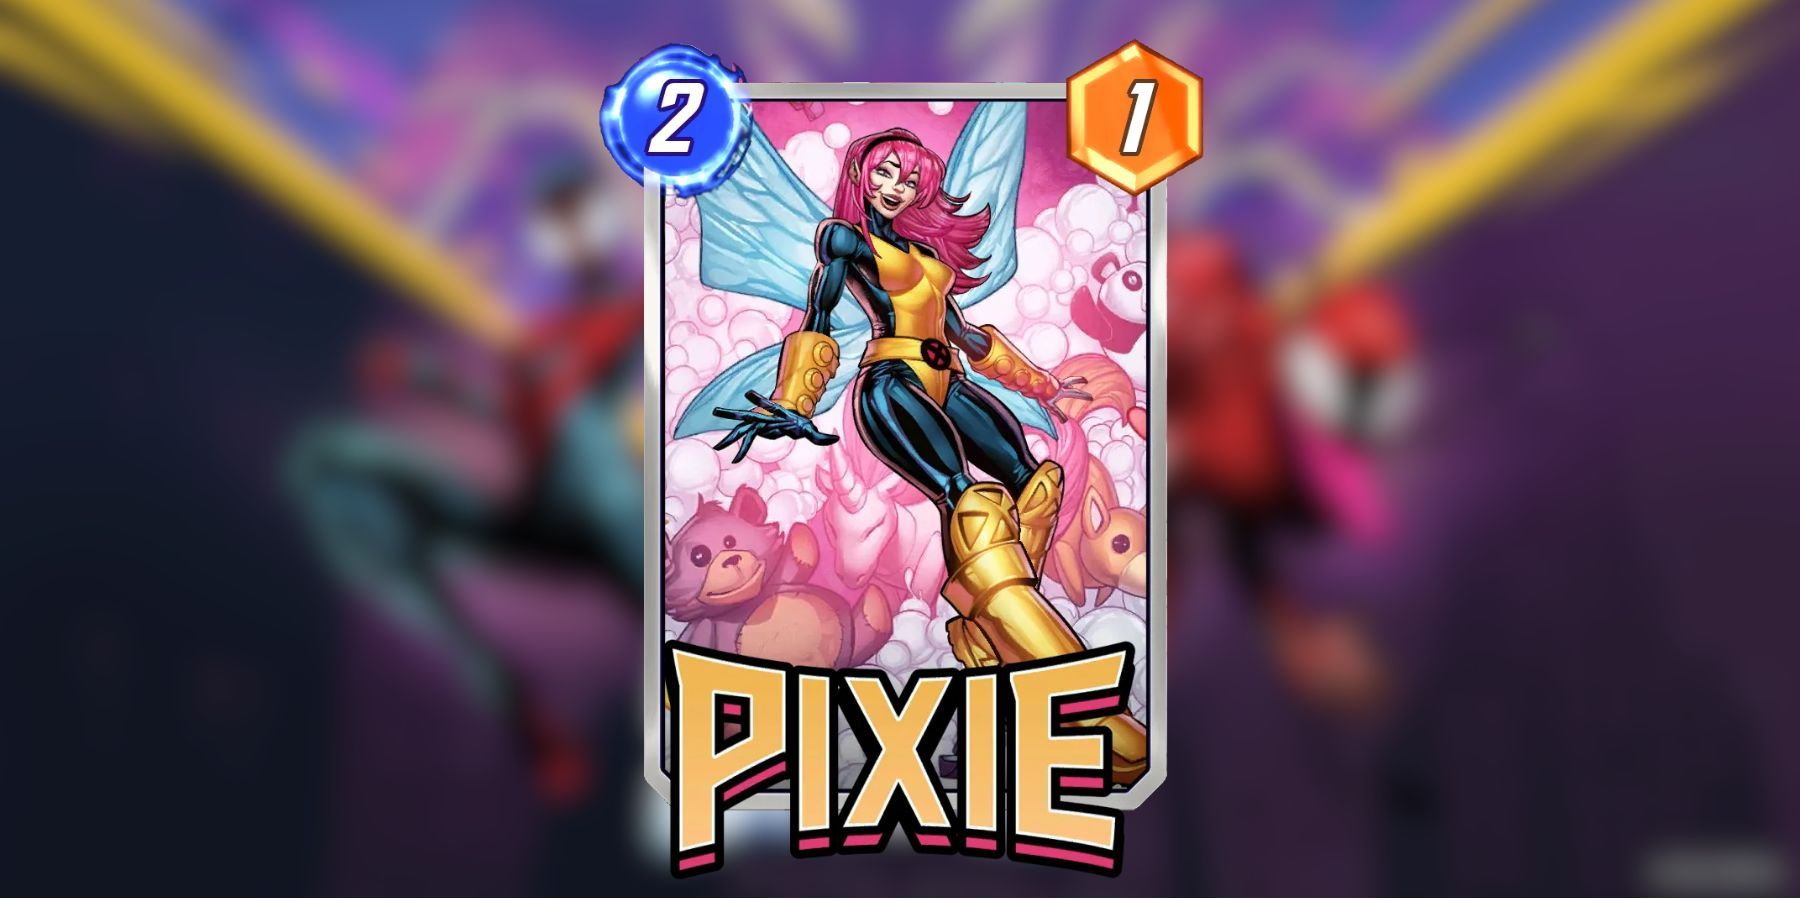 pixie card art in marvel snap.